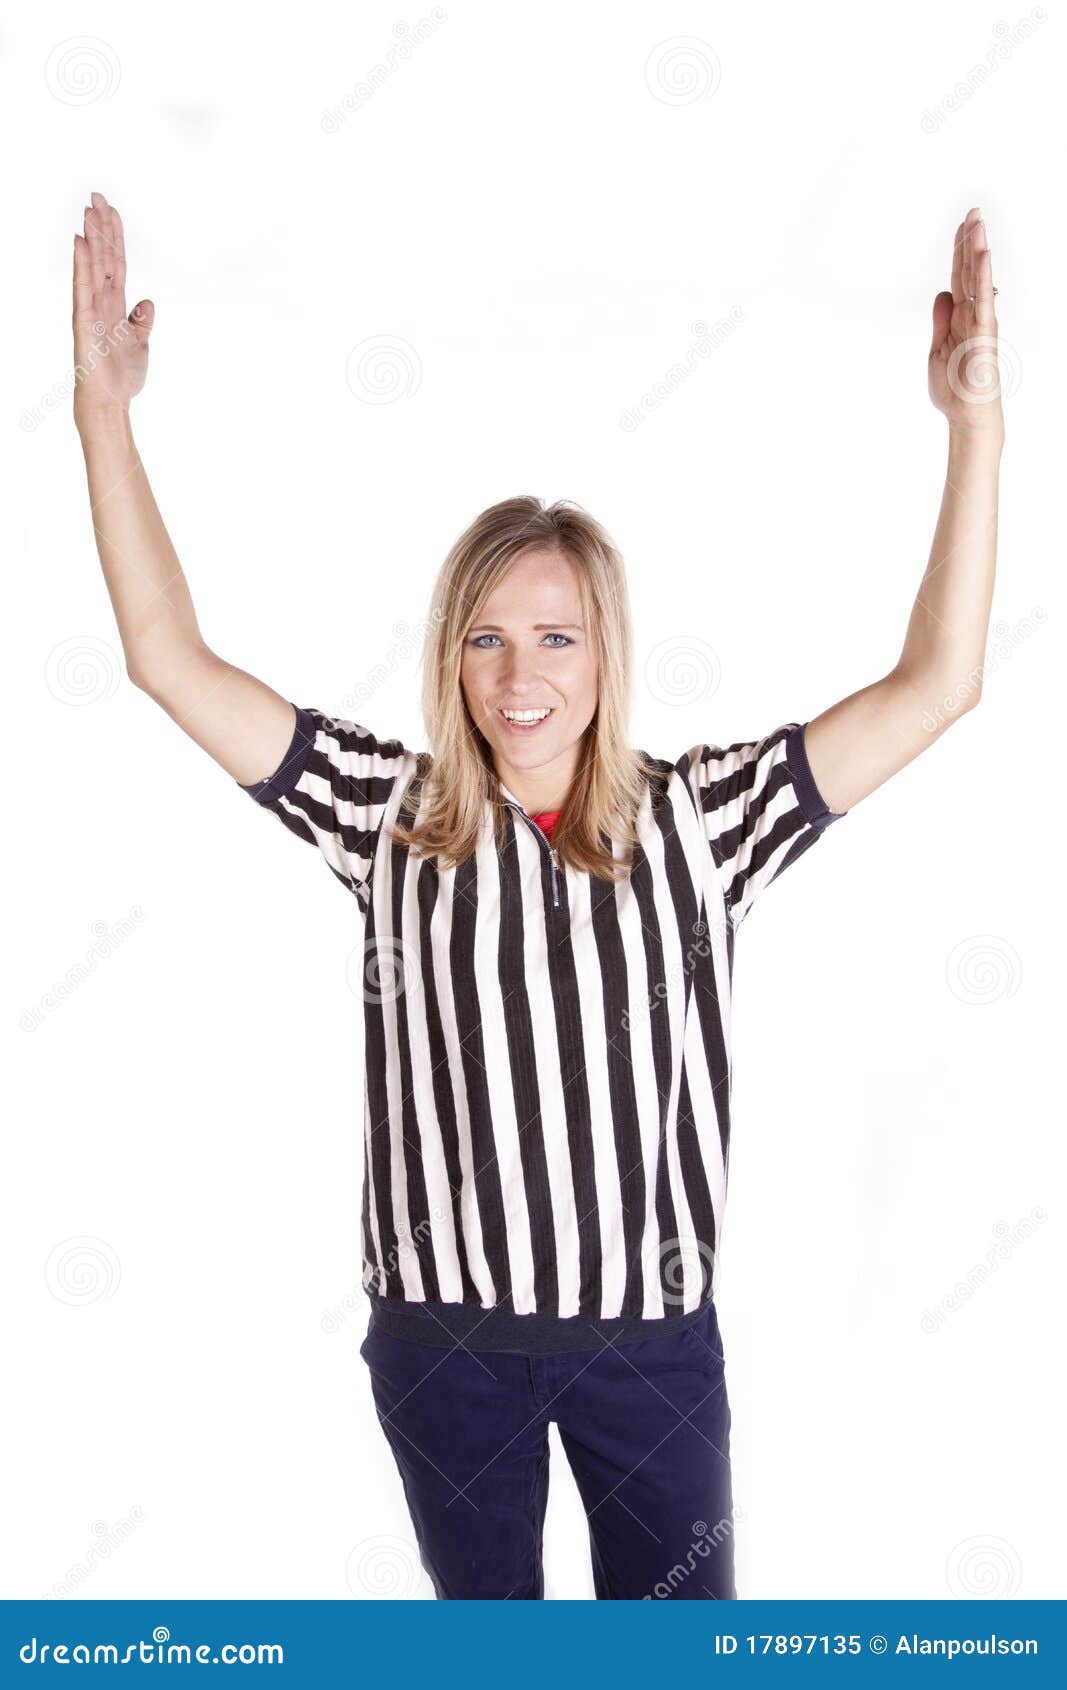 female-referee-call-touchdown-17897135.jpg